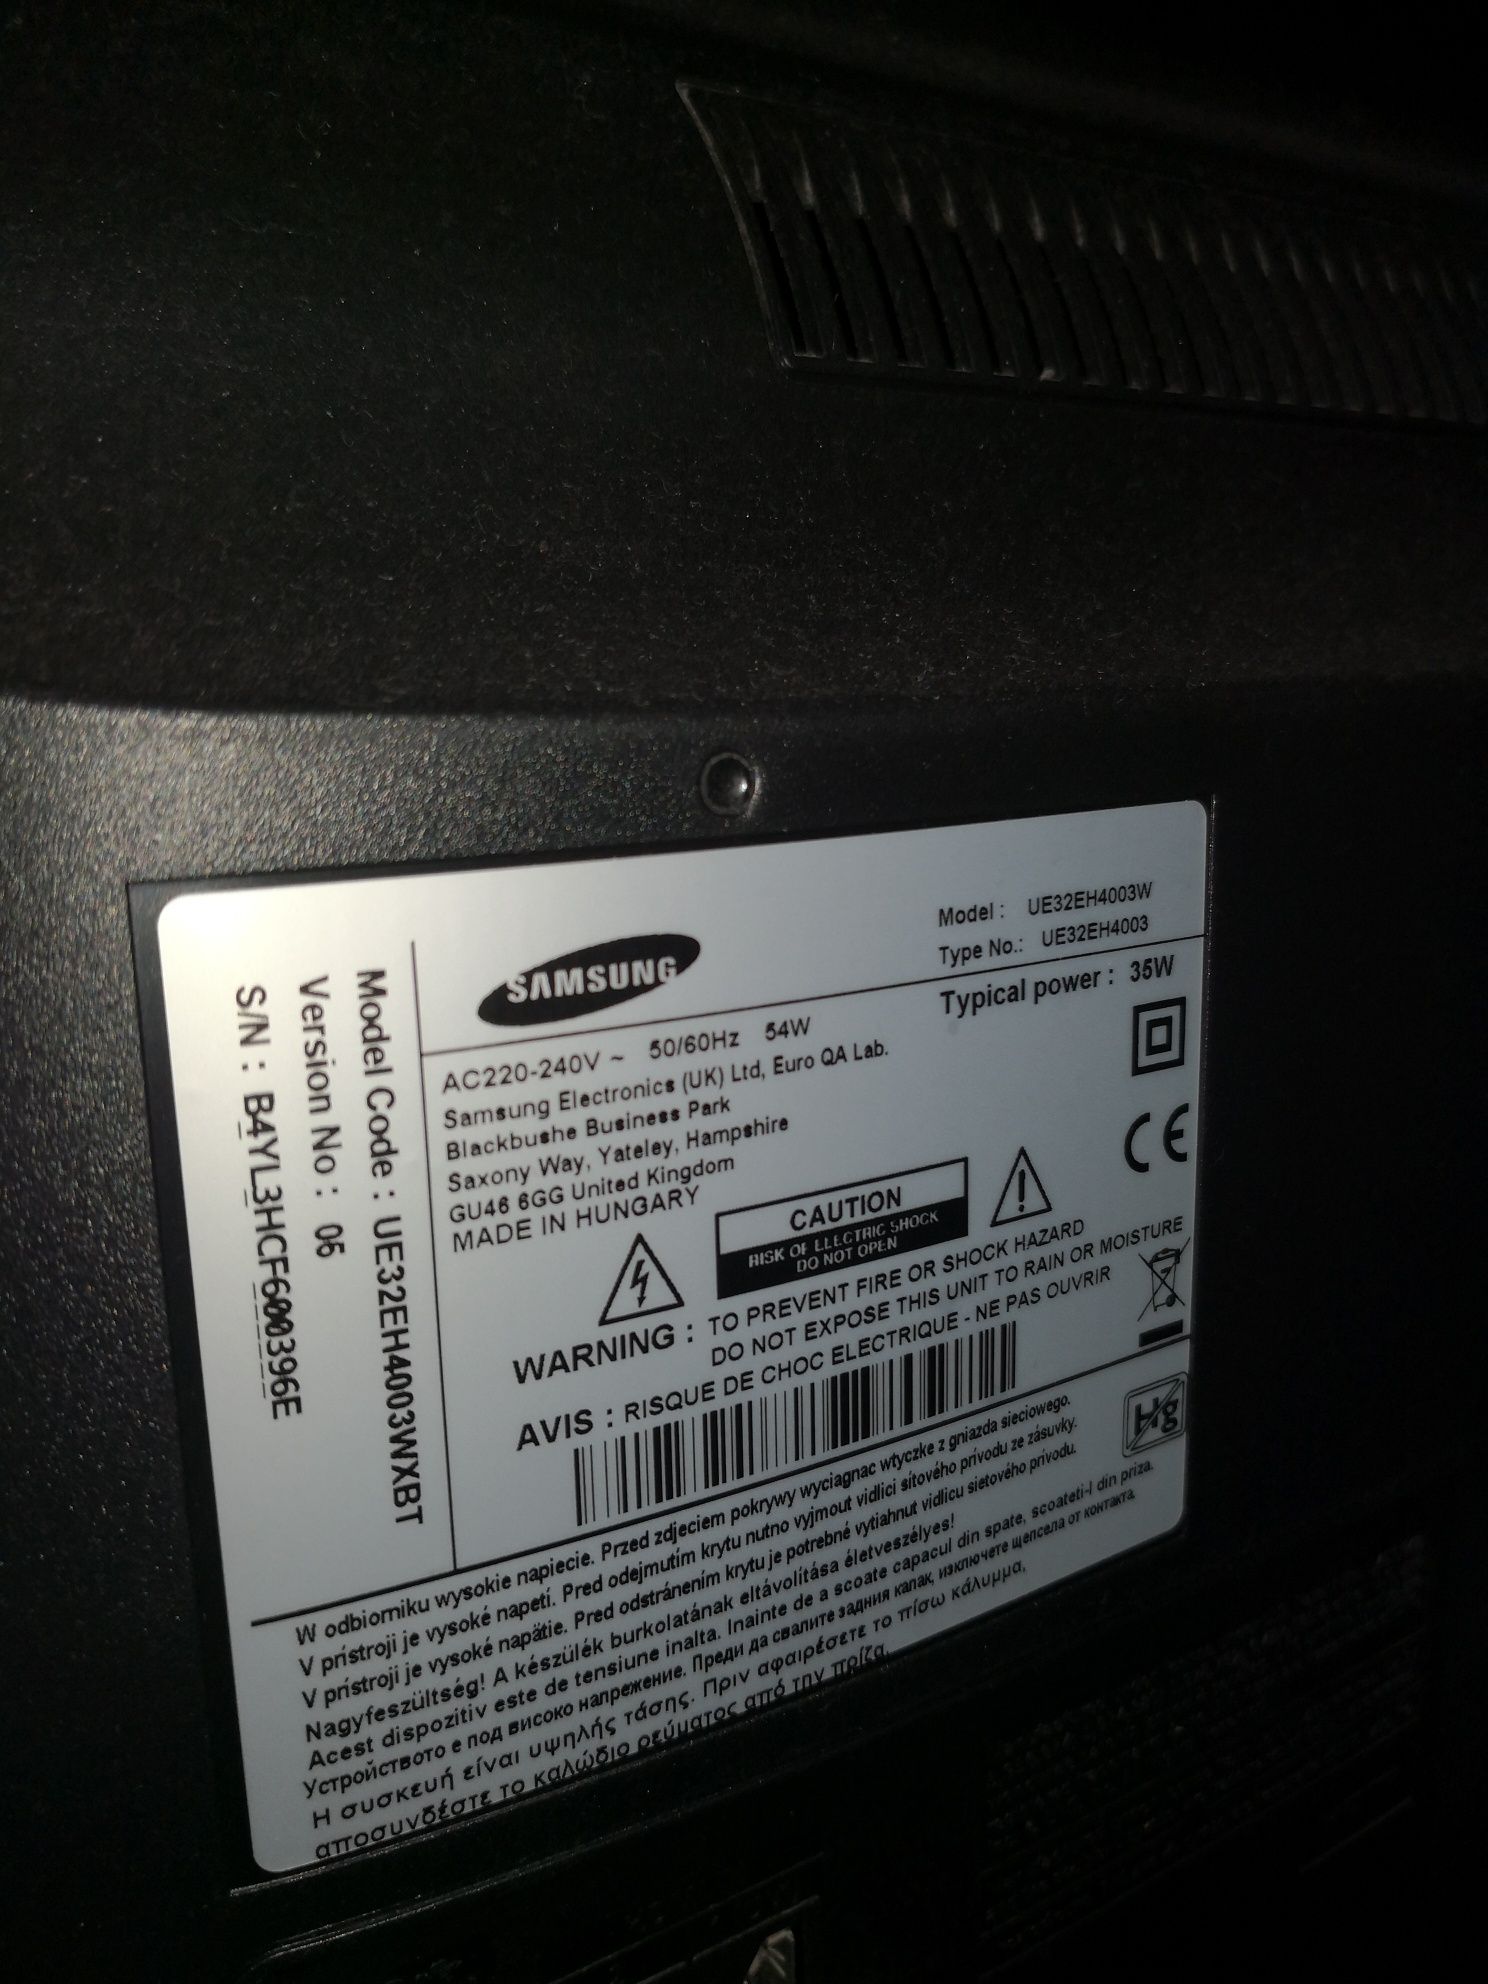 Oferta: Vand TV Samsung UE32EH400